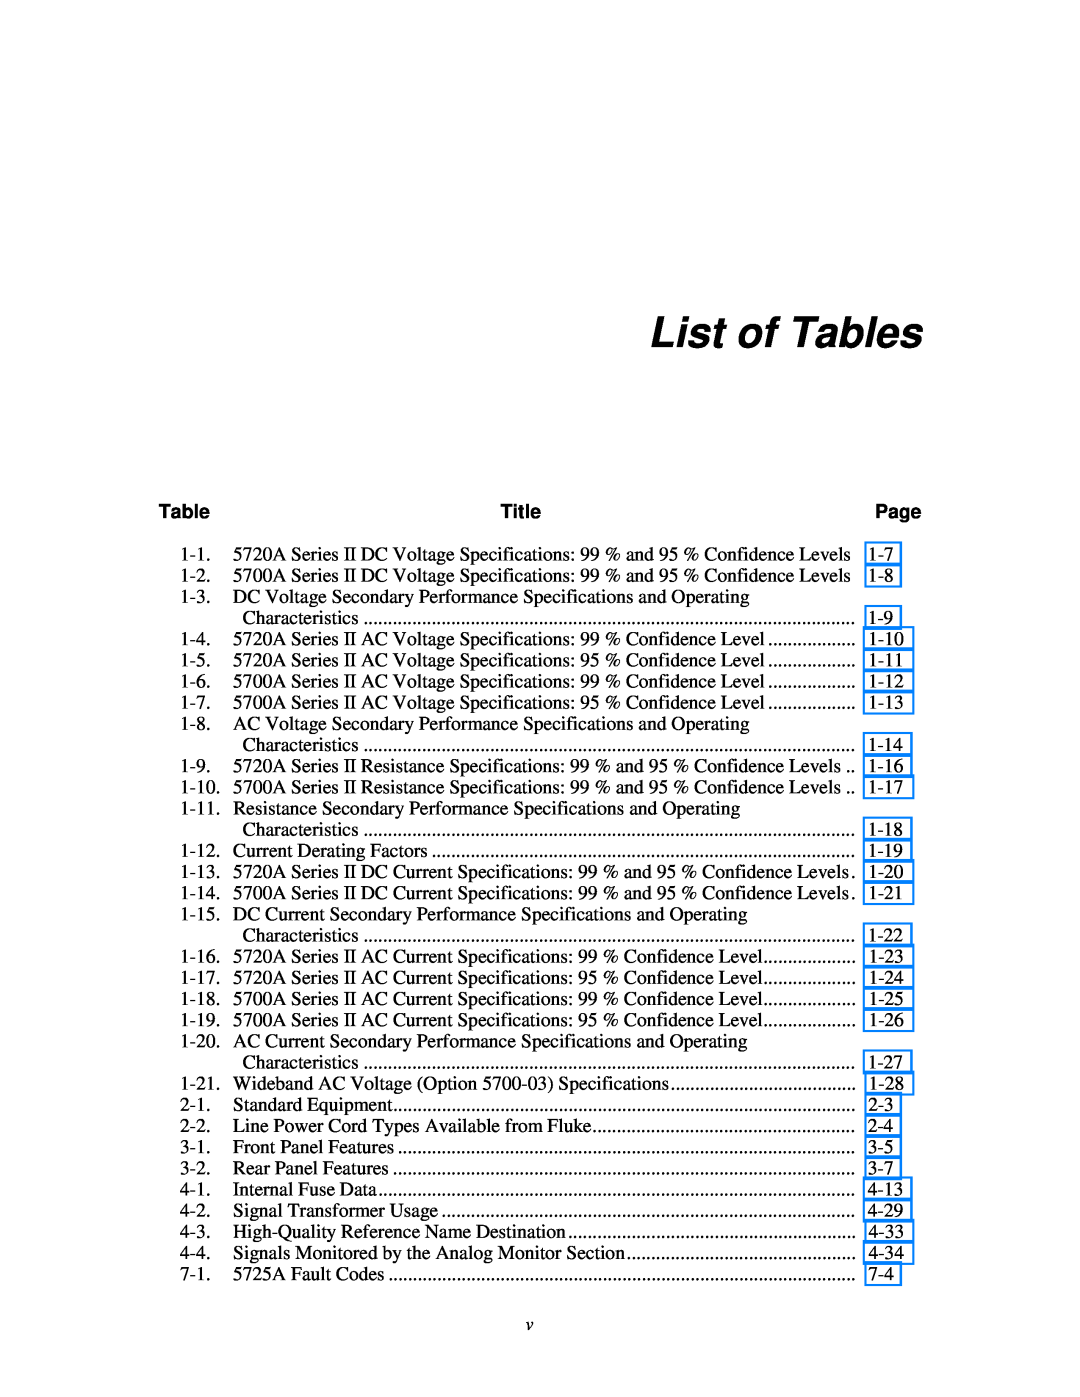 Fluke 5725A instruction manual List of Tables, Title 